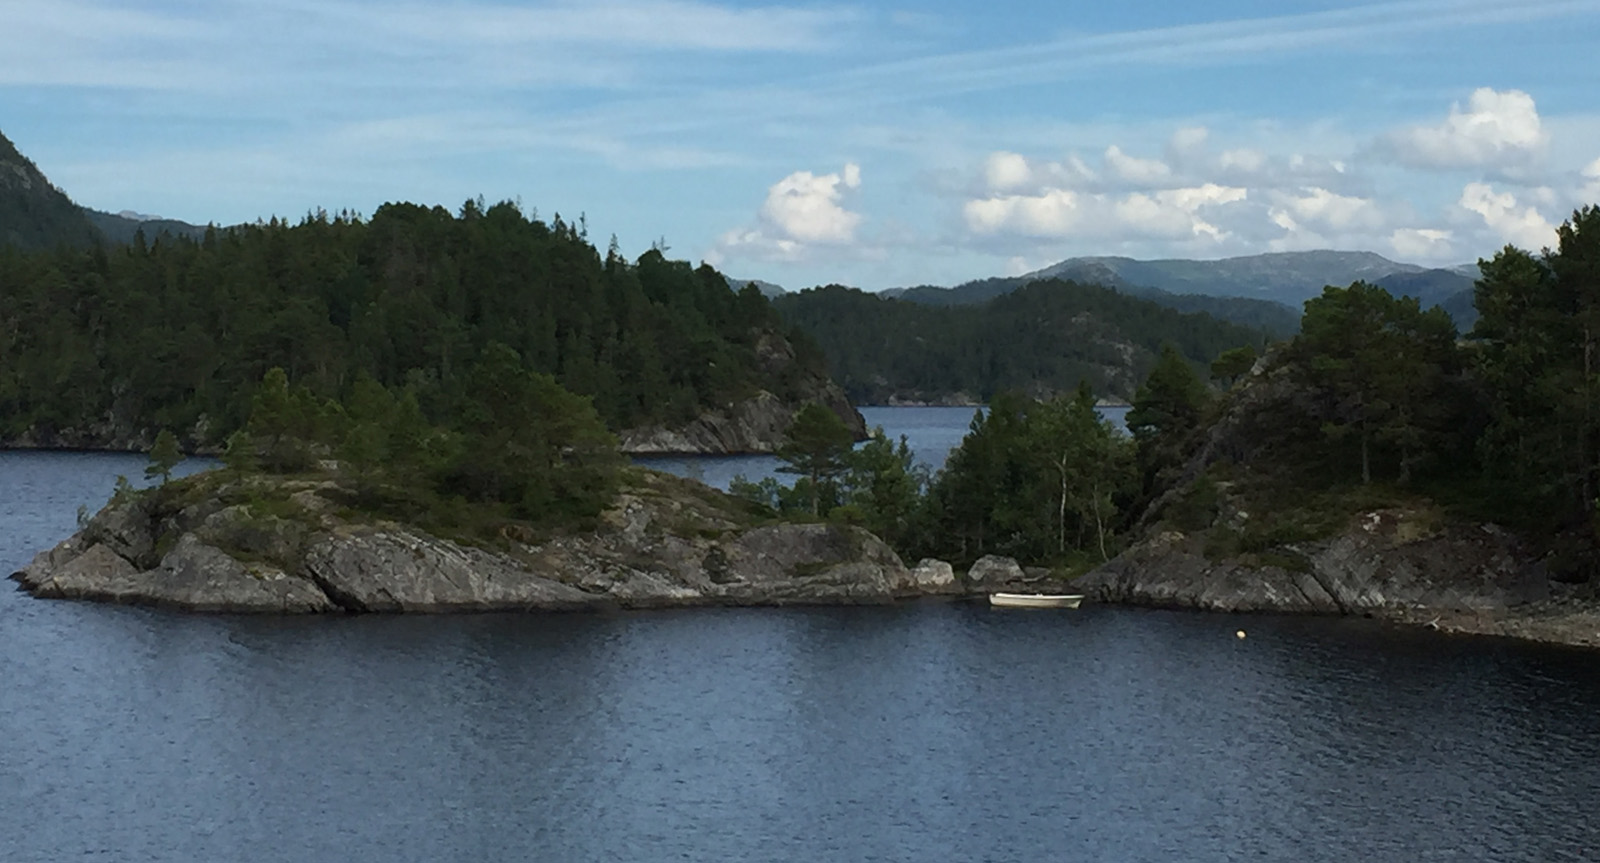 Fjorde wie Seen